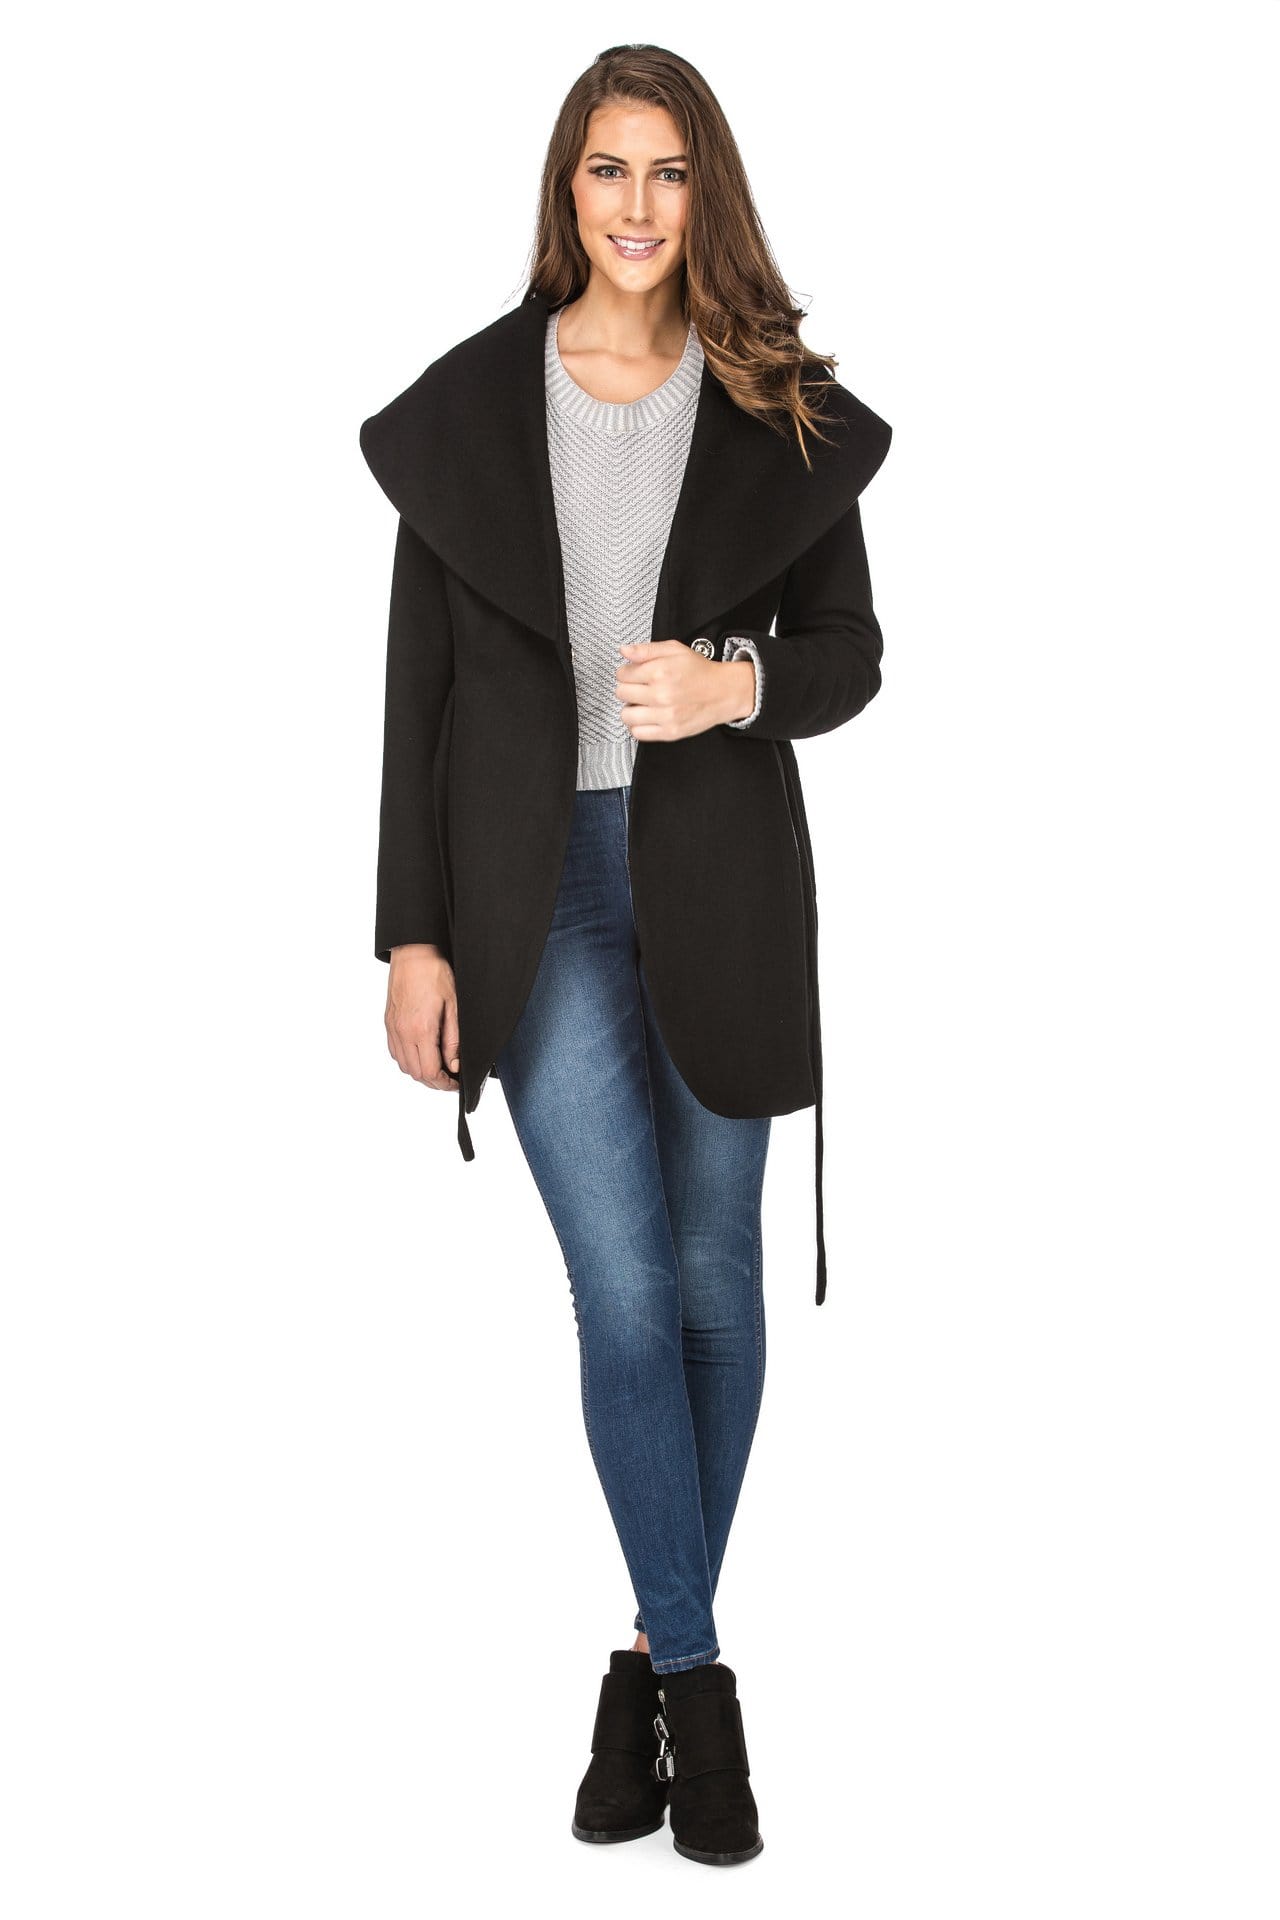 Wool Blend Coat Women Wool Wrap Coat with Tie Belt Elegant Notch Lapel  Winter Coat Mid-Length Overcoat